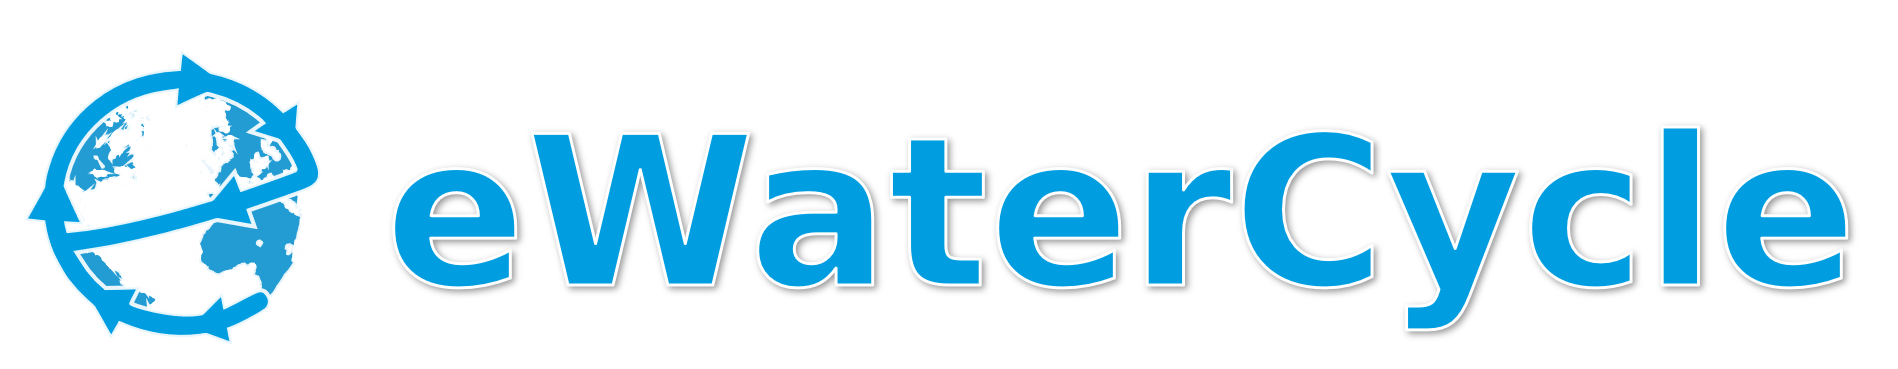 Logo of ewatercycle-hype